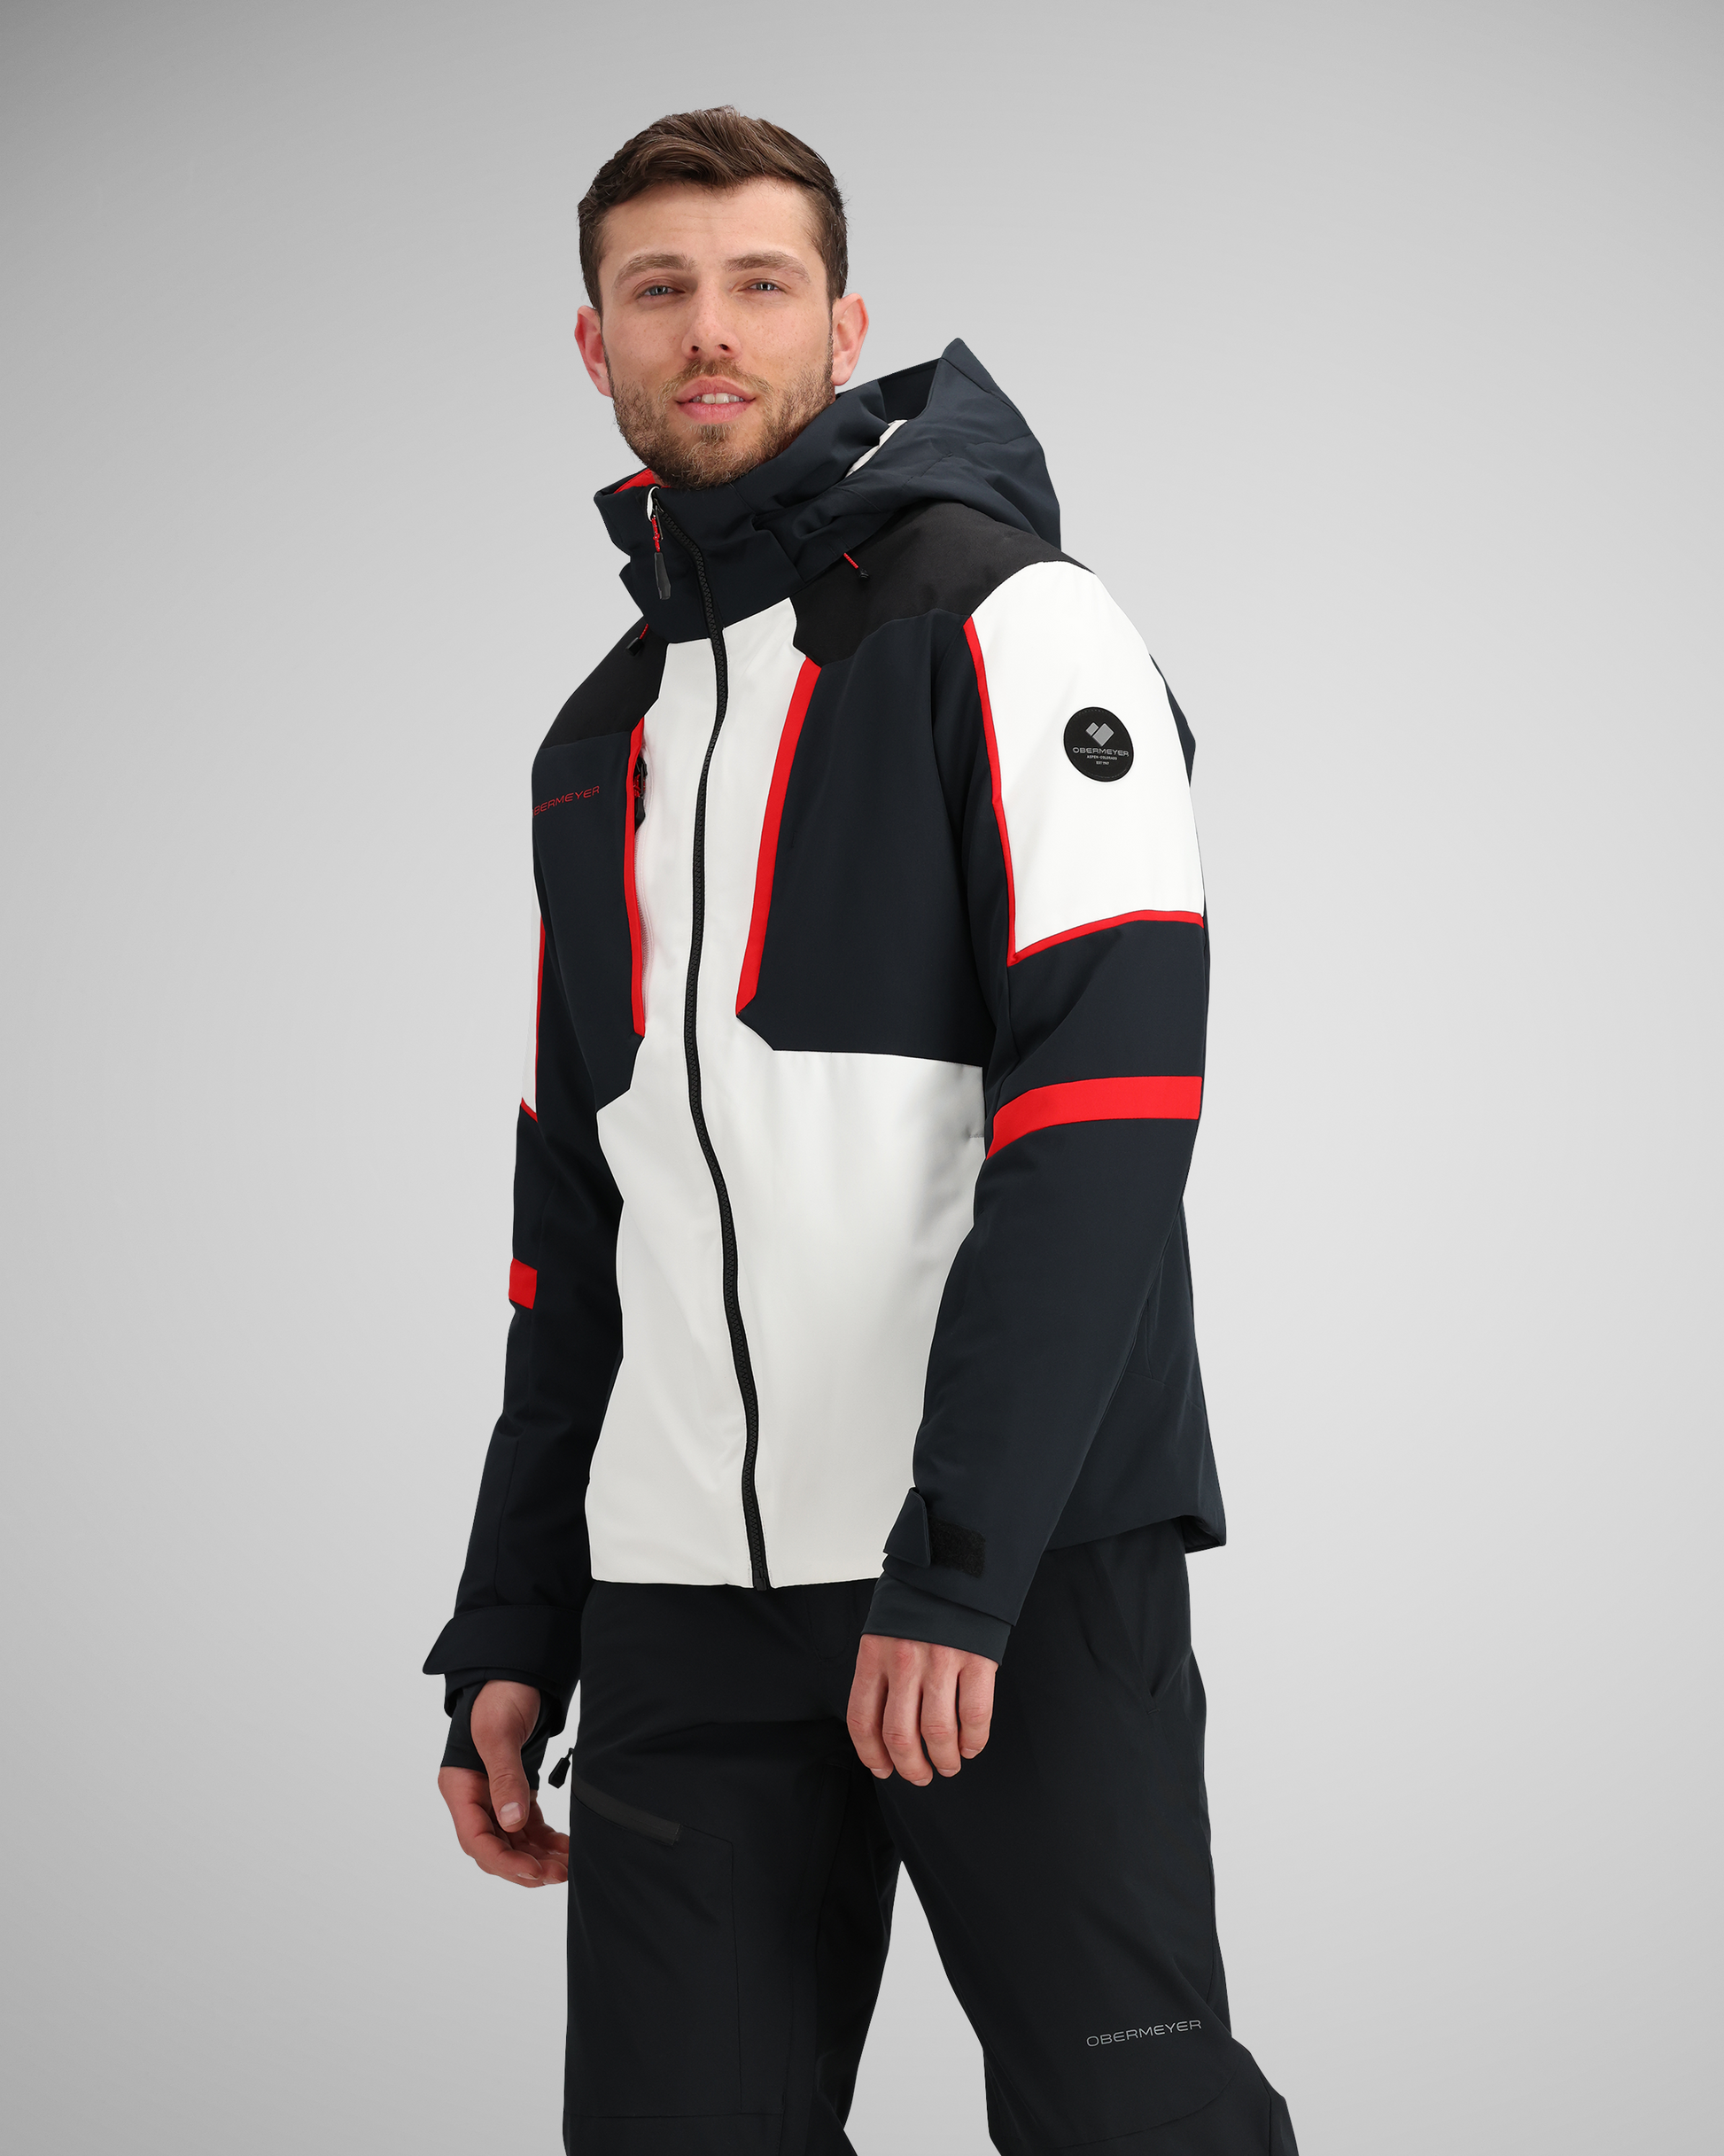 Ski Jacket - Grey FF tech fabric jacket